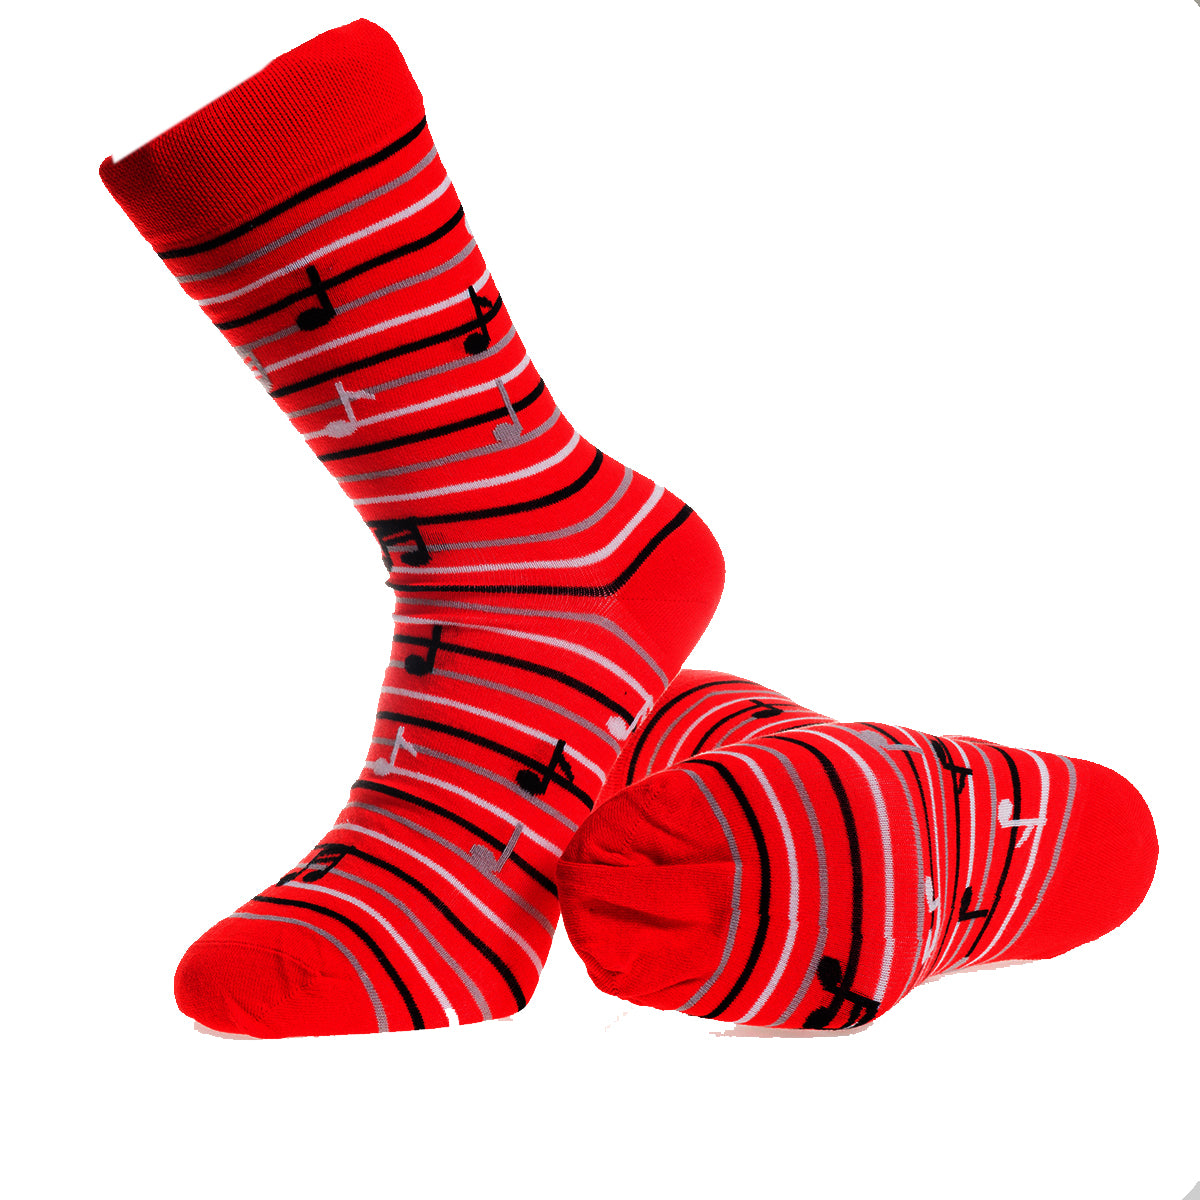 Black and Red -European Made - Egyptian Cotton Socks - Premium Cotton Fun socks with Soft Elastic